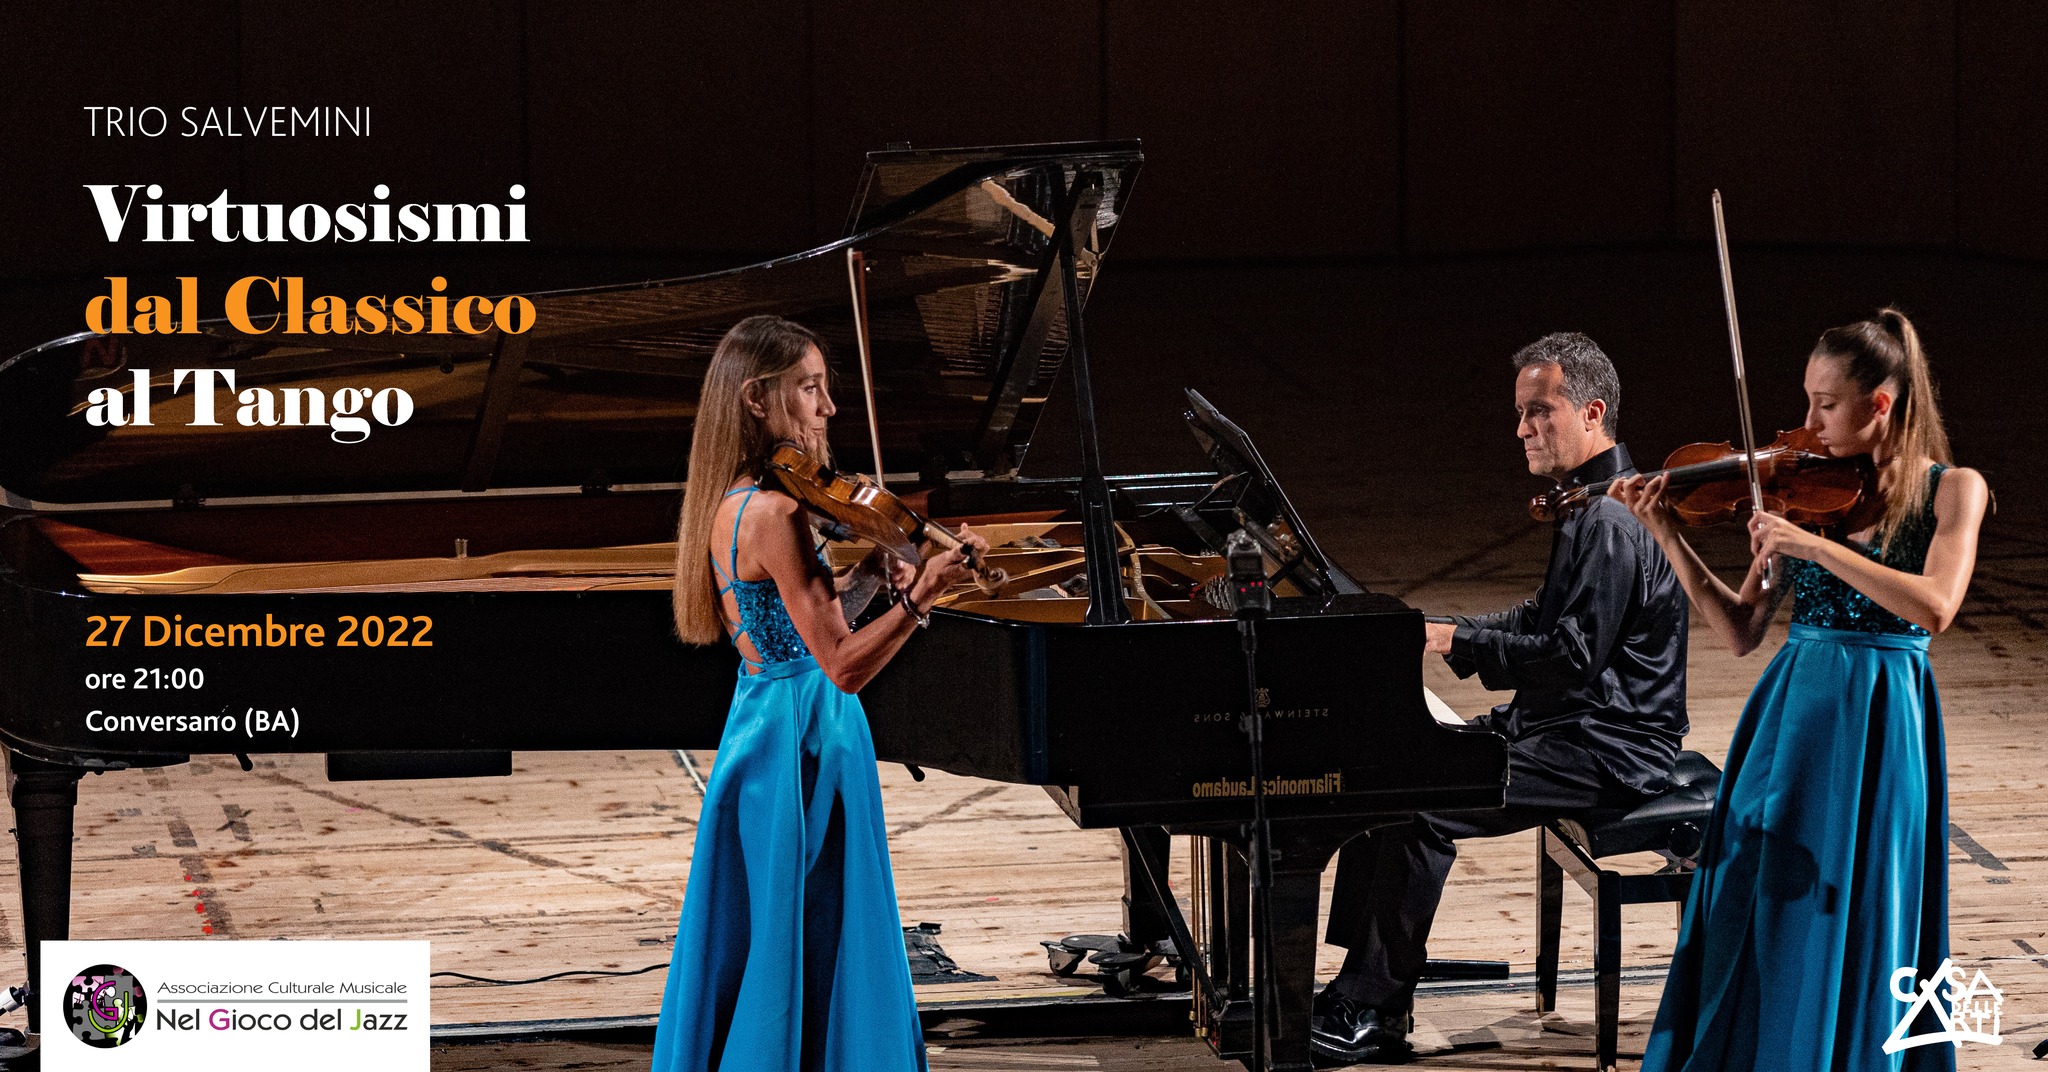 Trio Salvemini Virtuosismi dal classico al tango // 27.12.22